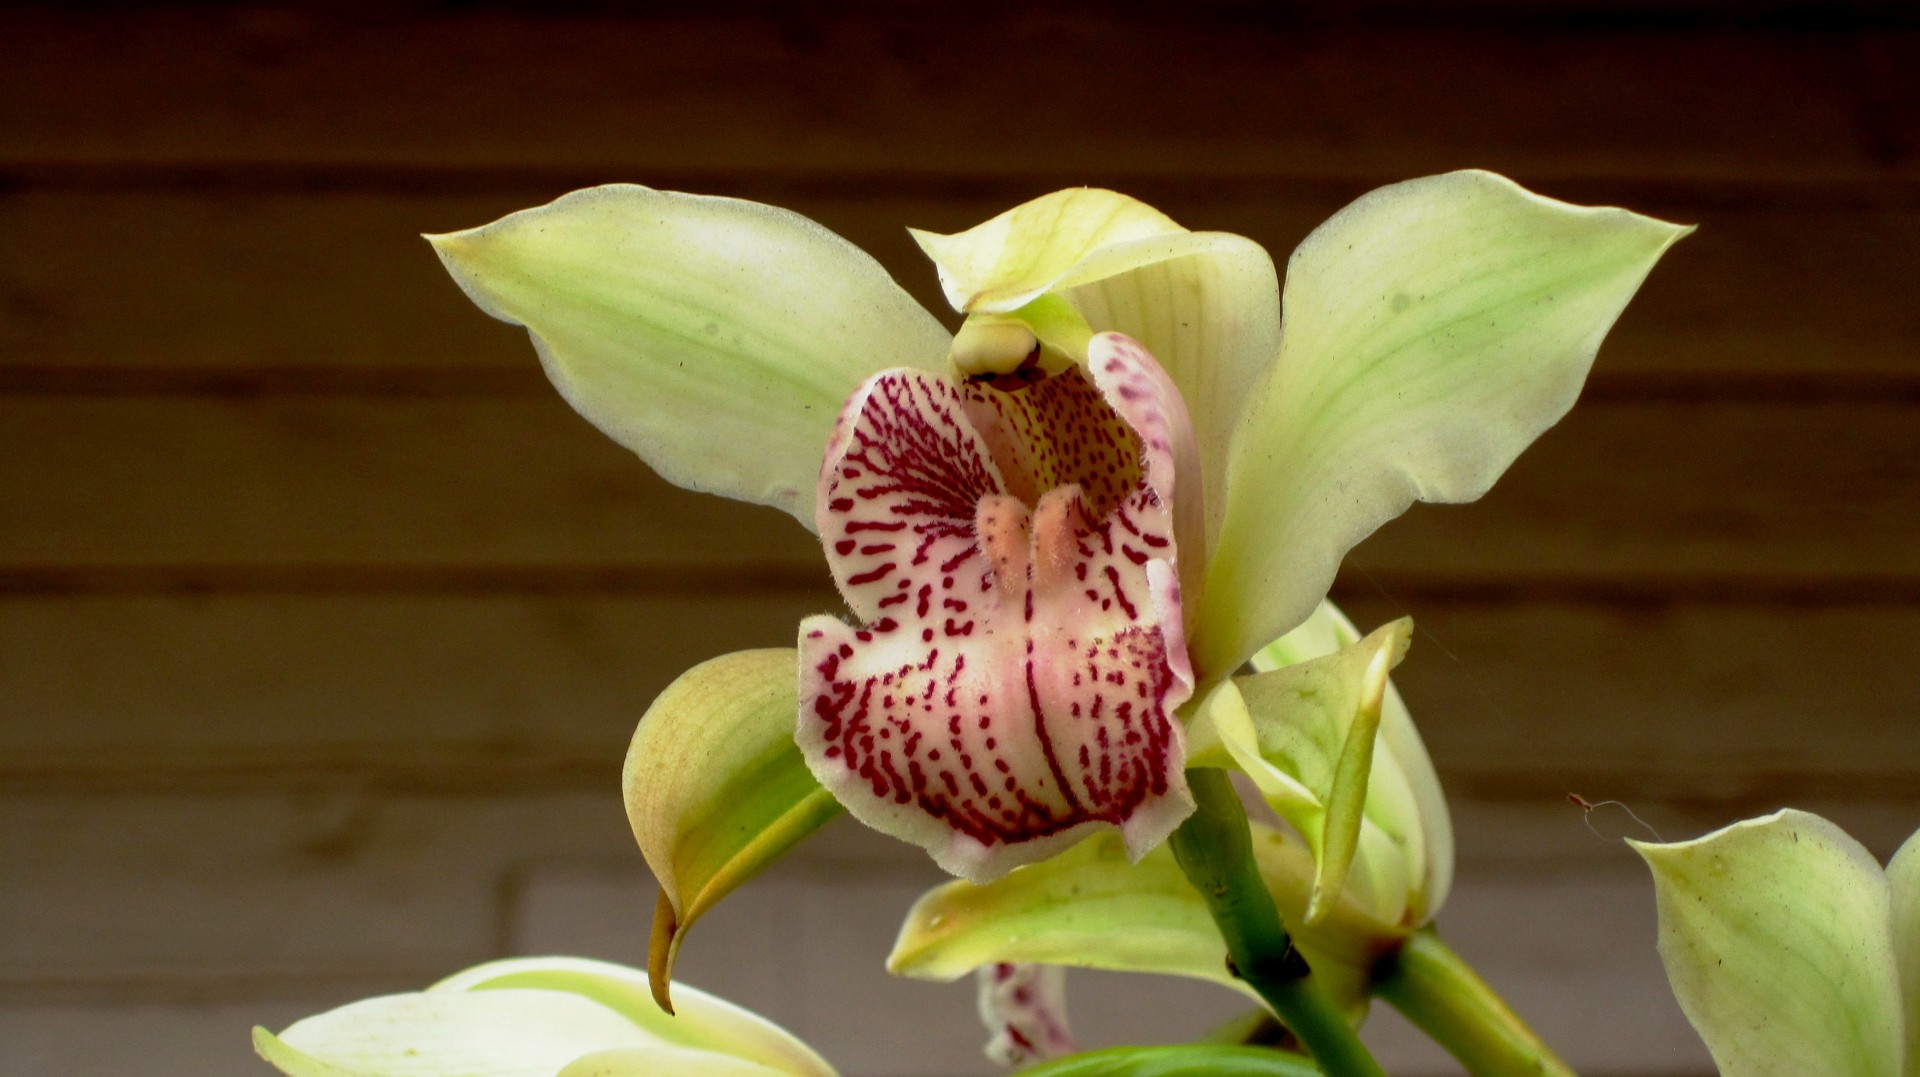 symbidium orchid flower free photo